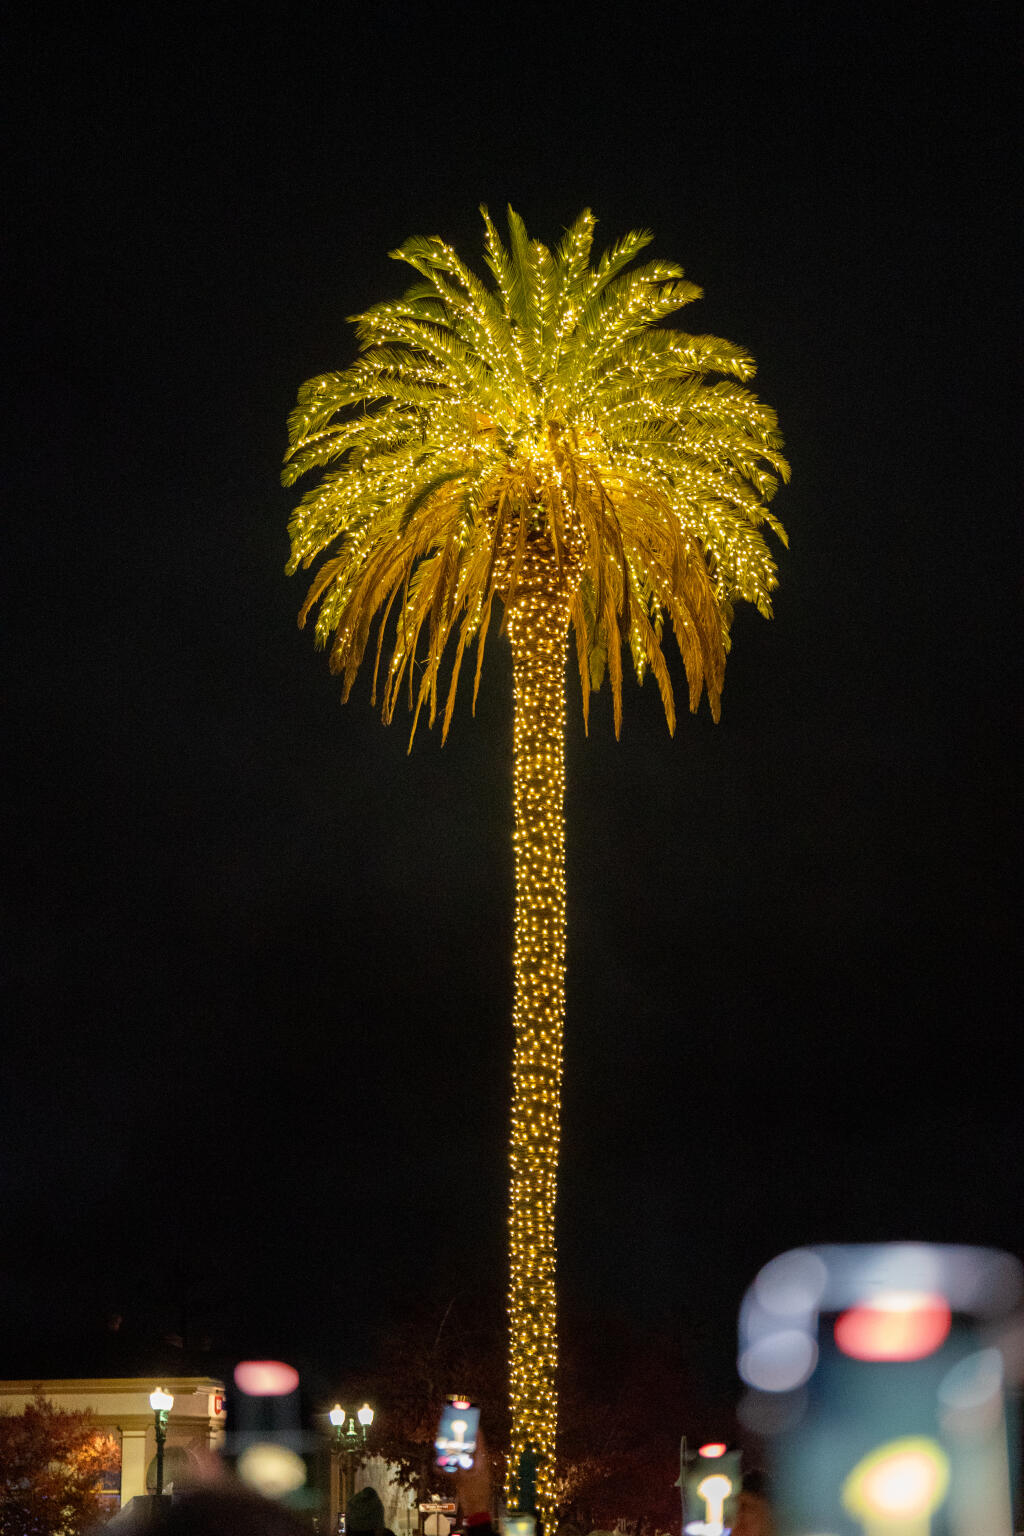 The Sonoma Plaza palm tree is illuminated with lights on Saturday, Nov. 18, 2023 in Sonoma. (Nicholas Vides / For The Press Democrat)